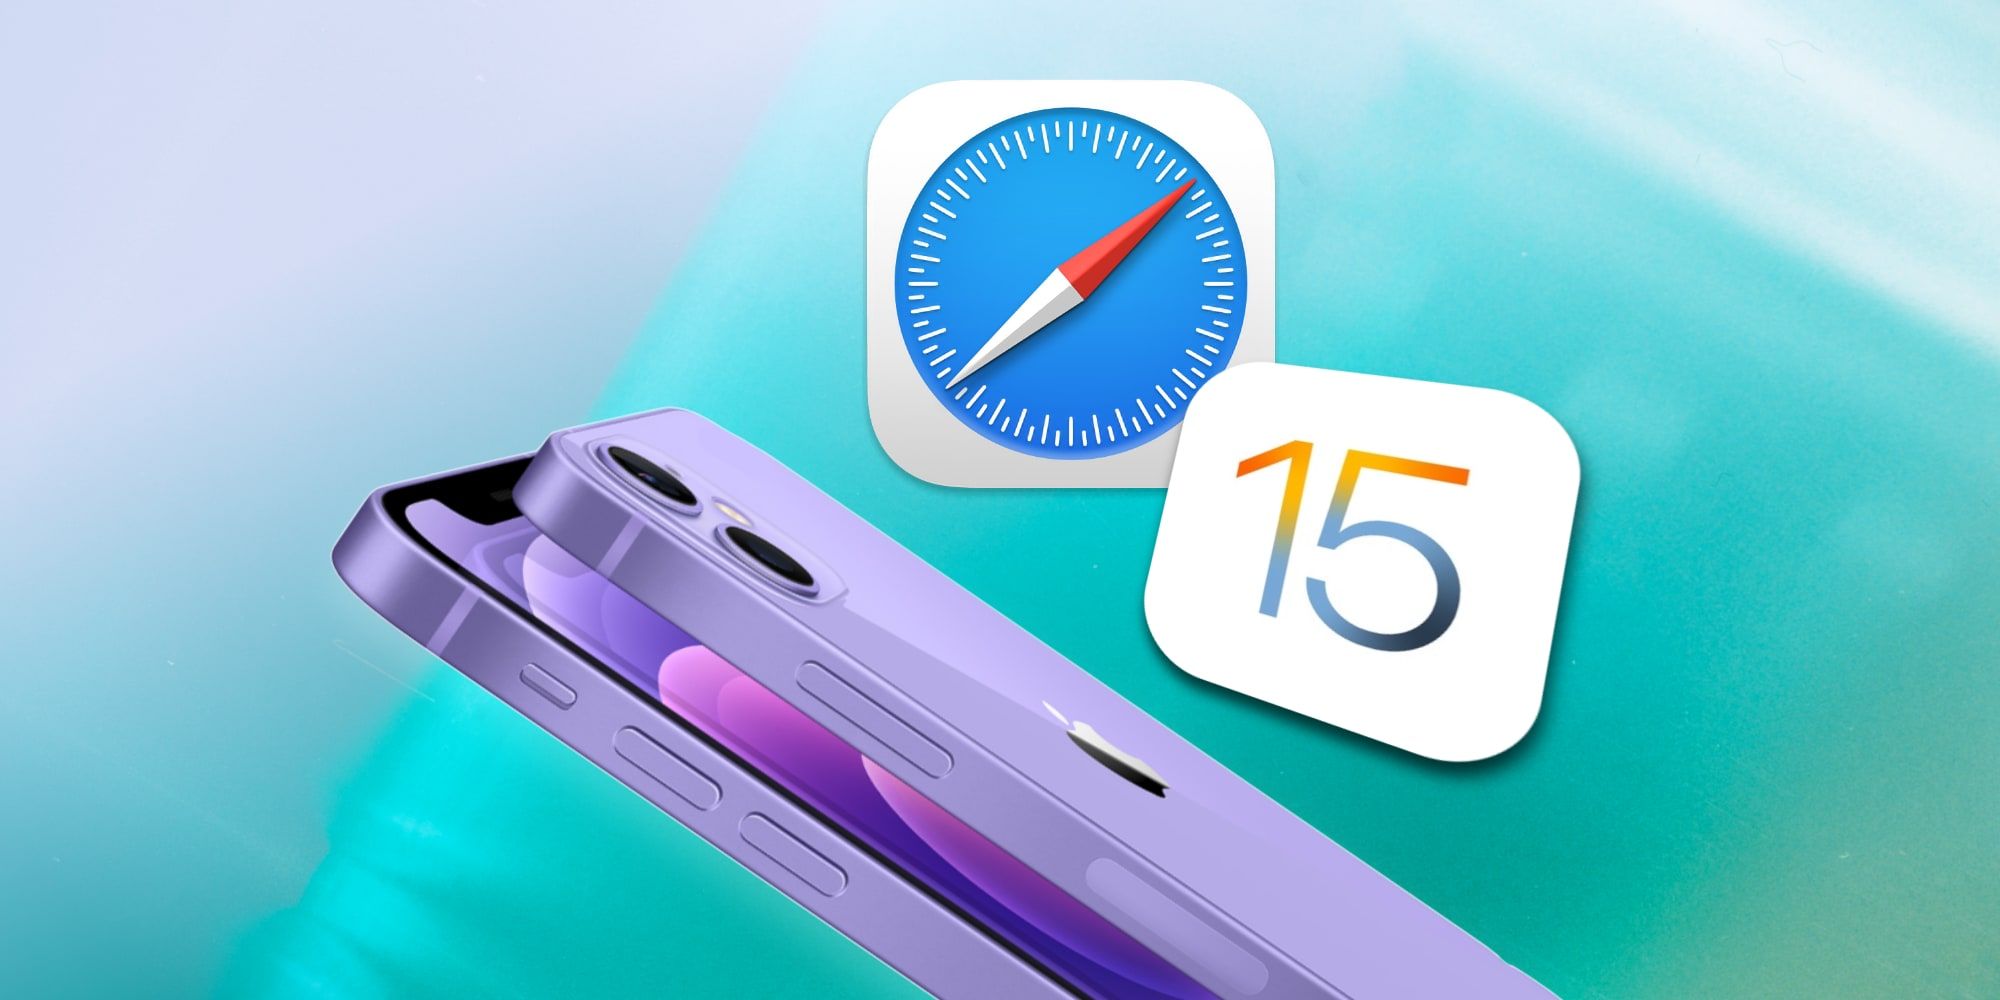 Apple iPhone 12 With Safari Logo And iOS 15